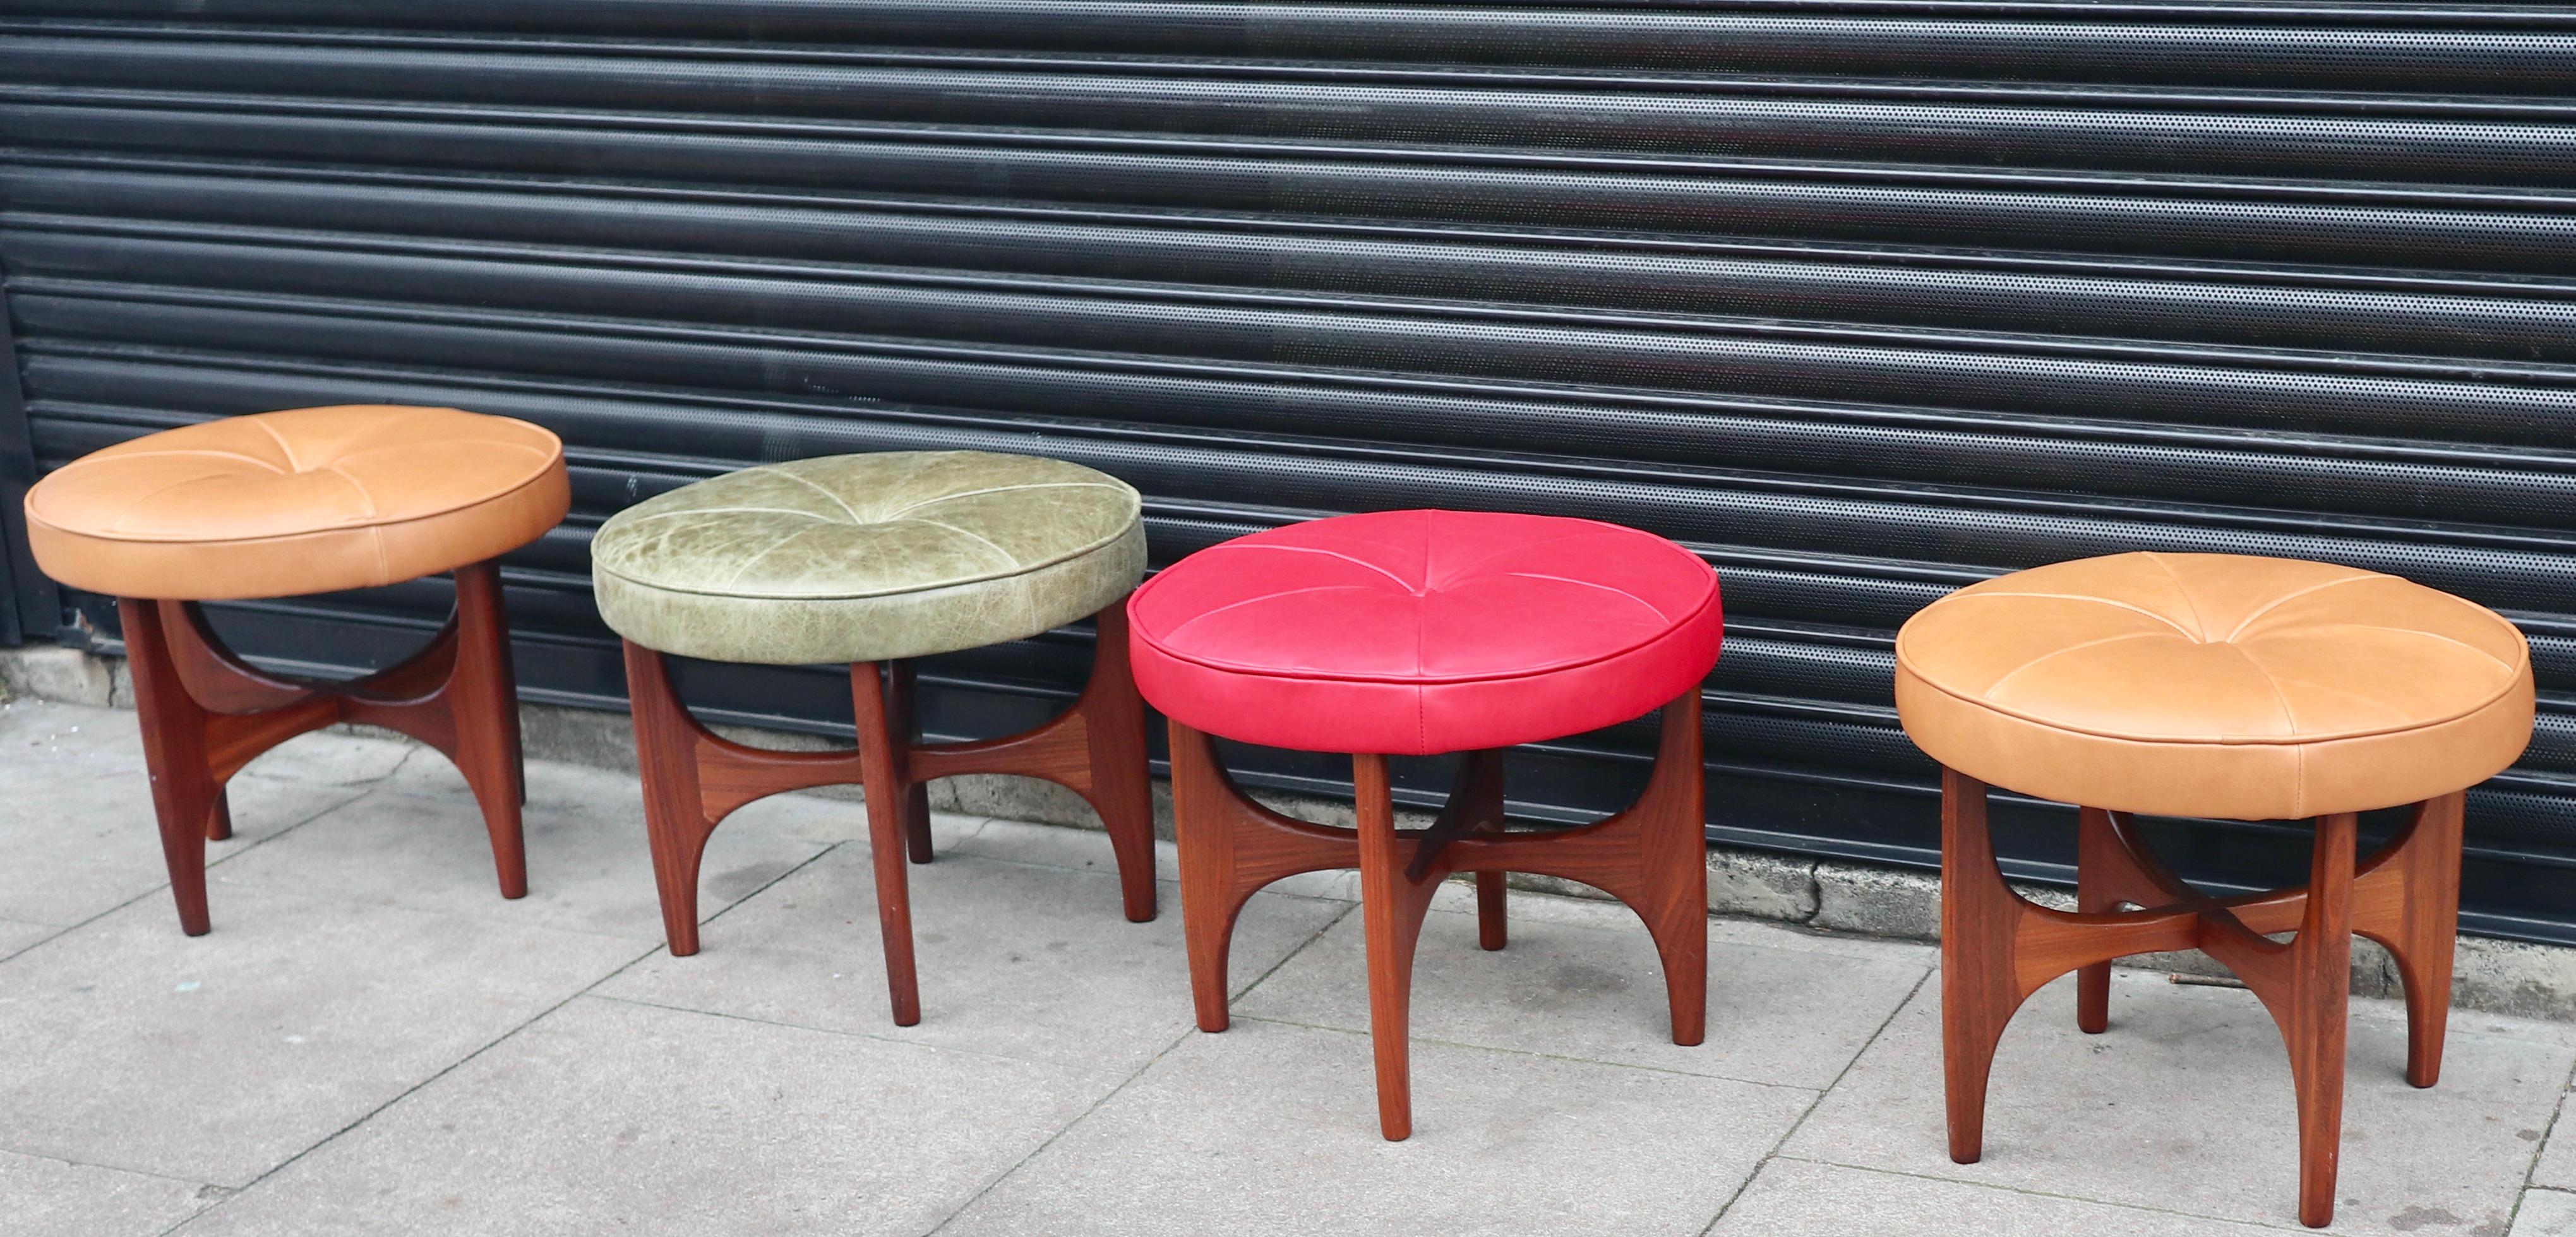 1970s English G-plan Teak based leather/cloth footstool designed by Kofod larsen For Sale 12